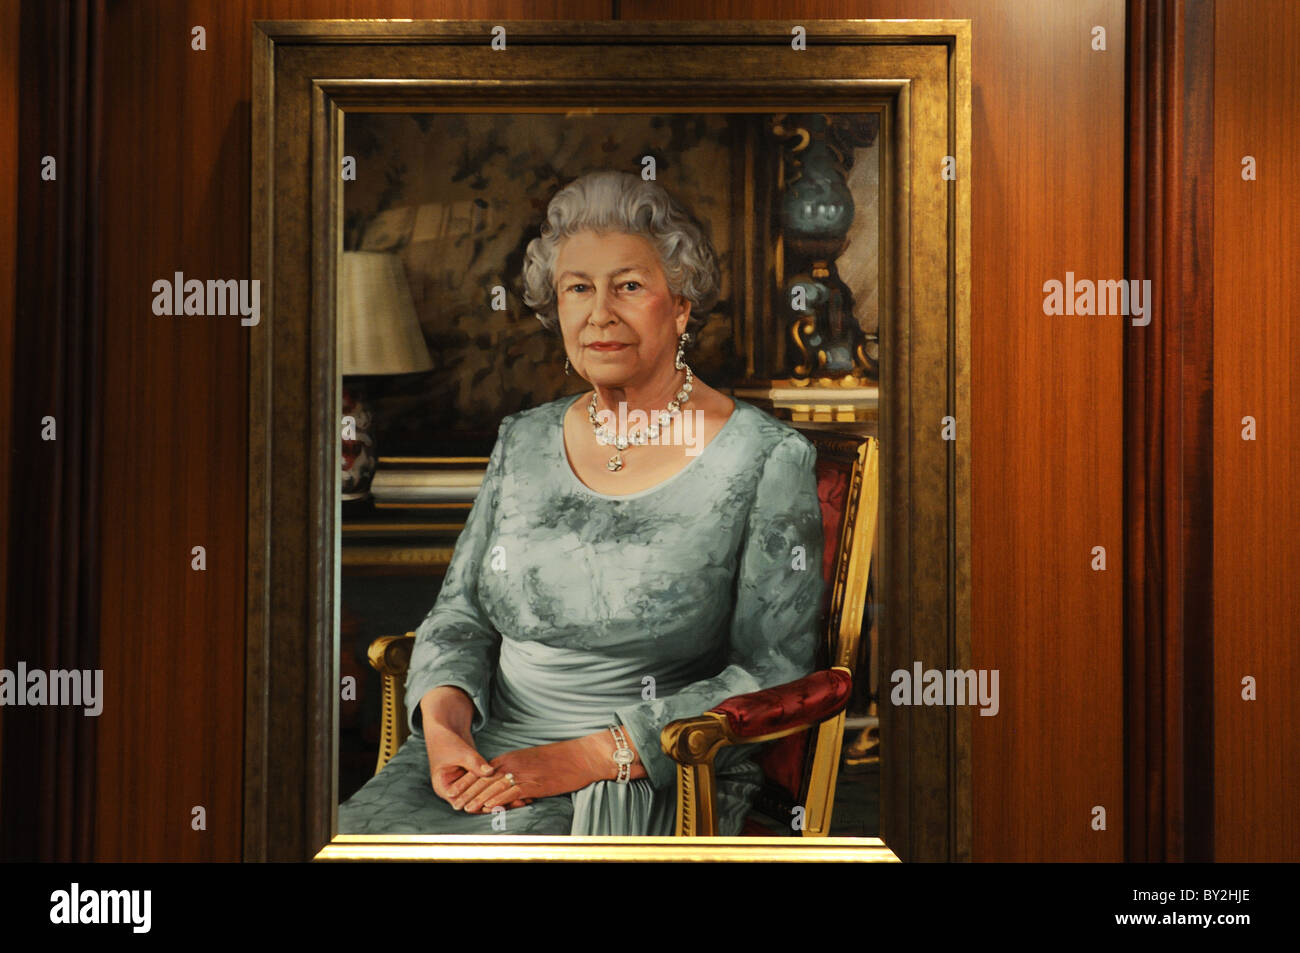 A portrait of Queen Elizabeth II by Isobel Peachey hangs in the atrium of Queen Elizabeth, Cunard's newest ship. Stock Photo